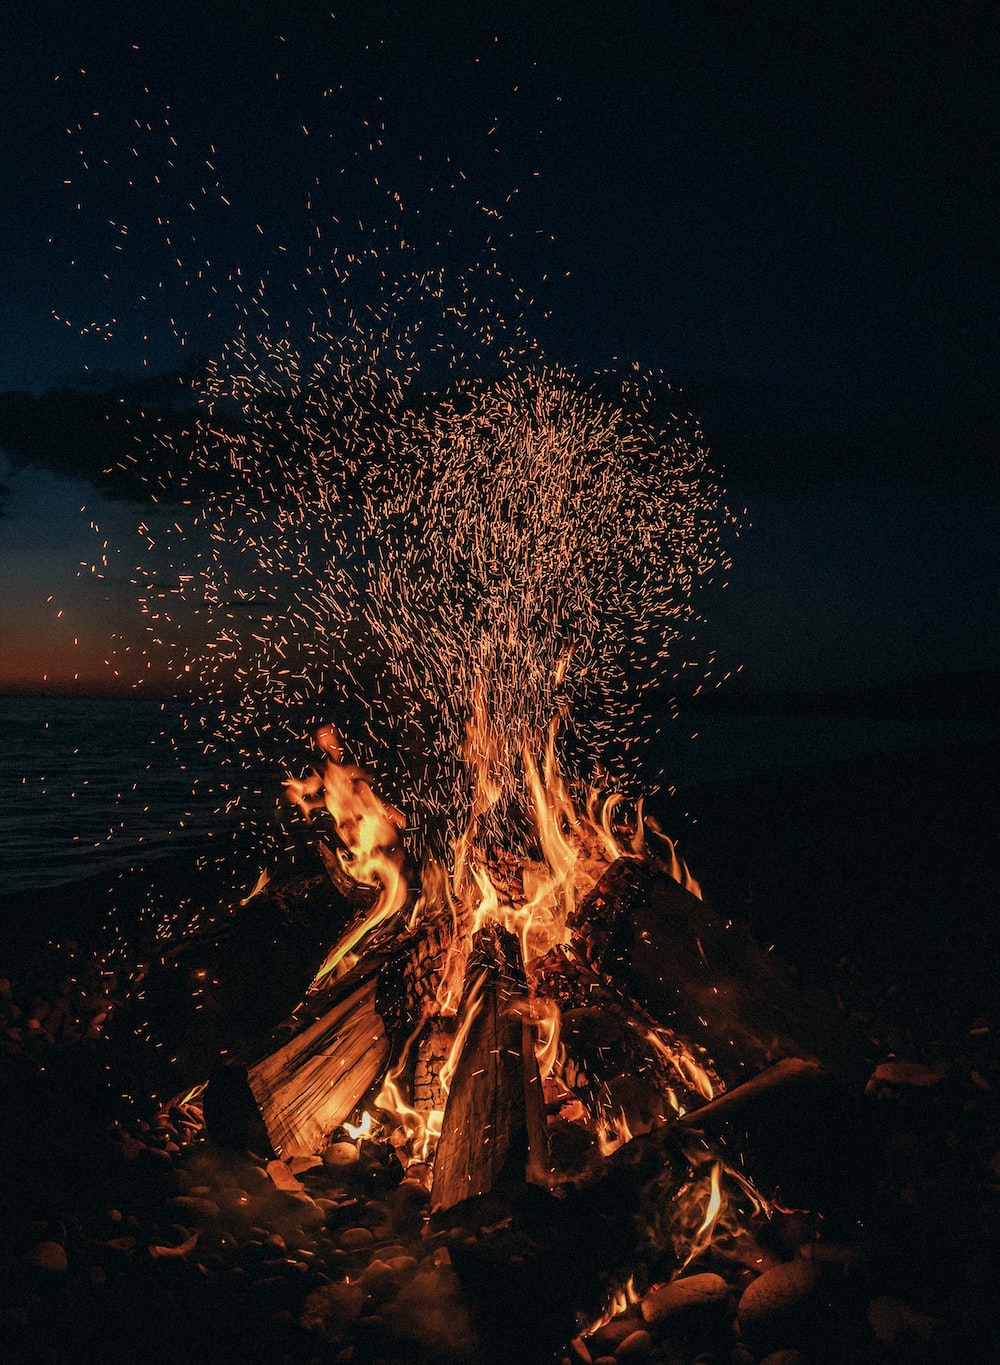 Beach Bonfire Picture. Download Free Image